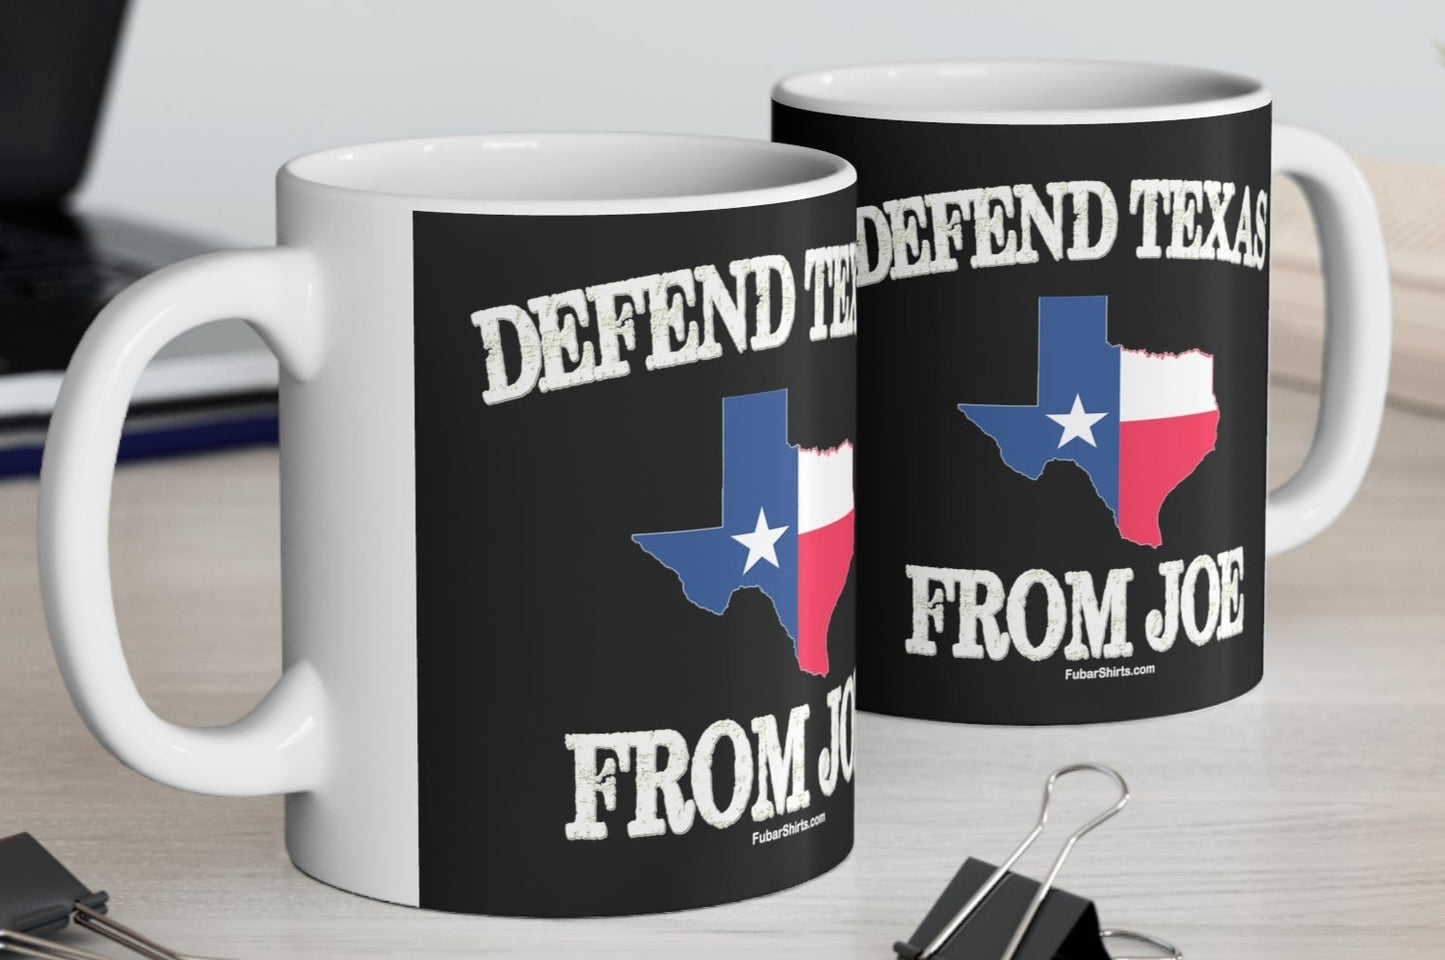 Texas Border Control Mug | Defend Texas From Joe Coffee Mug